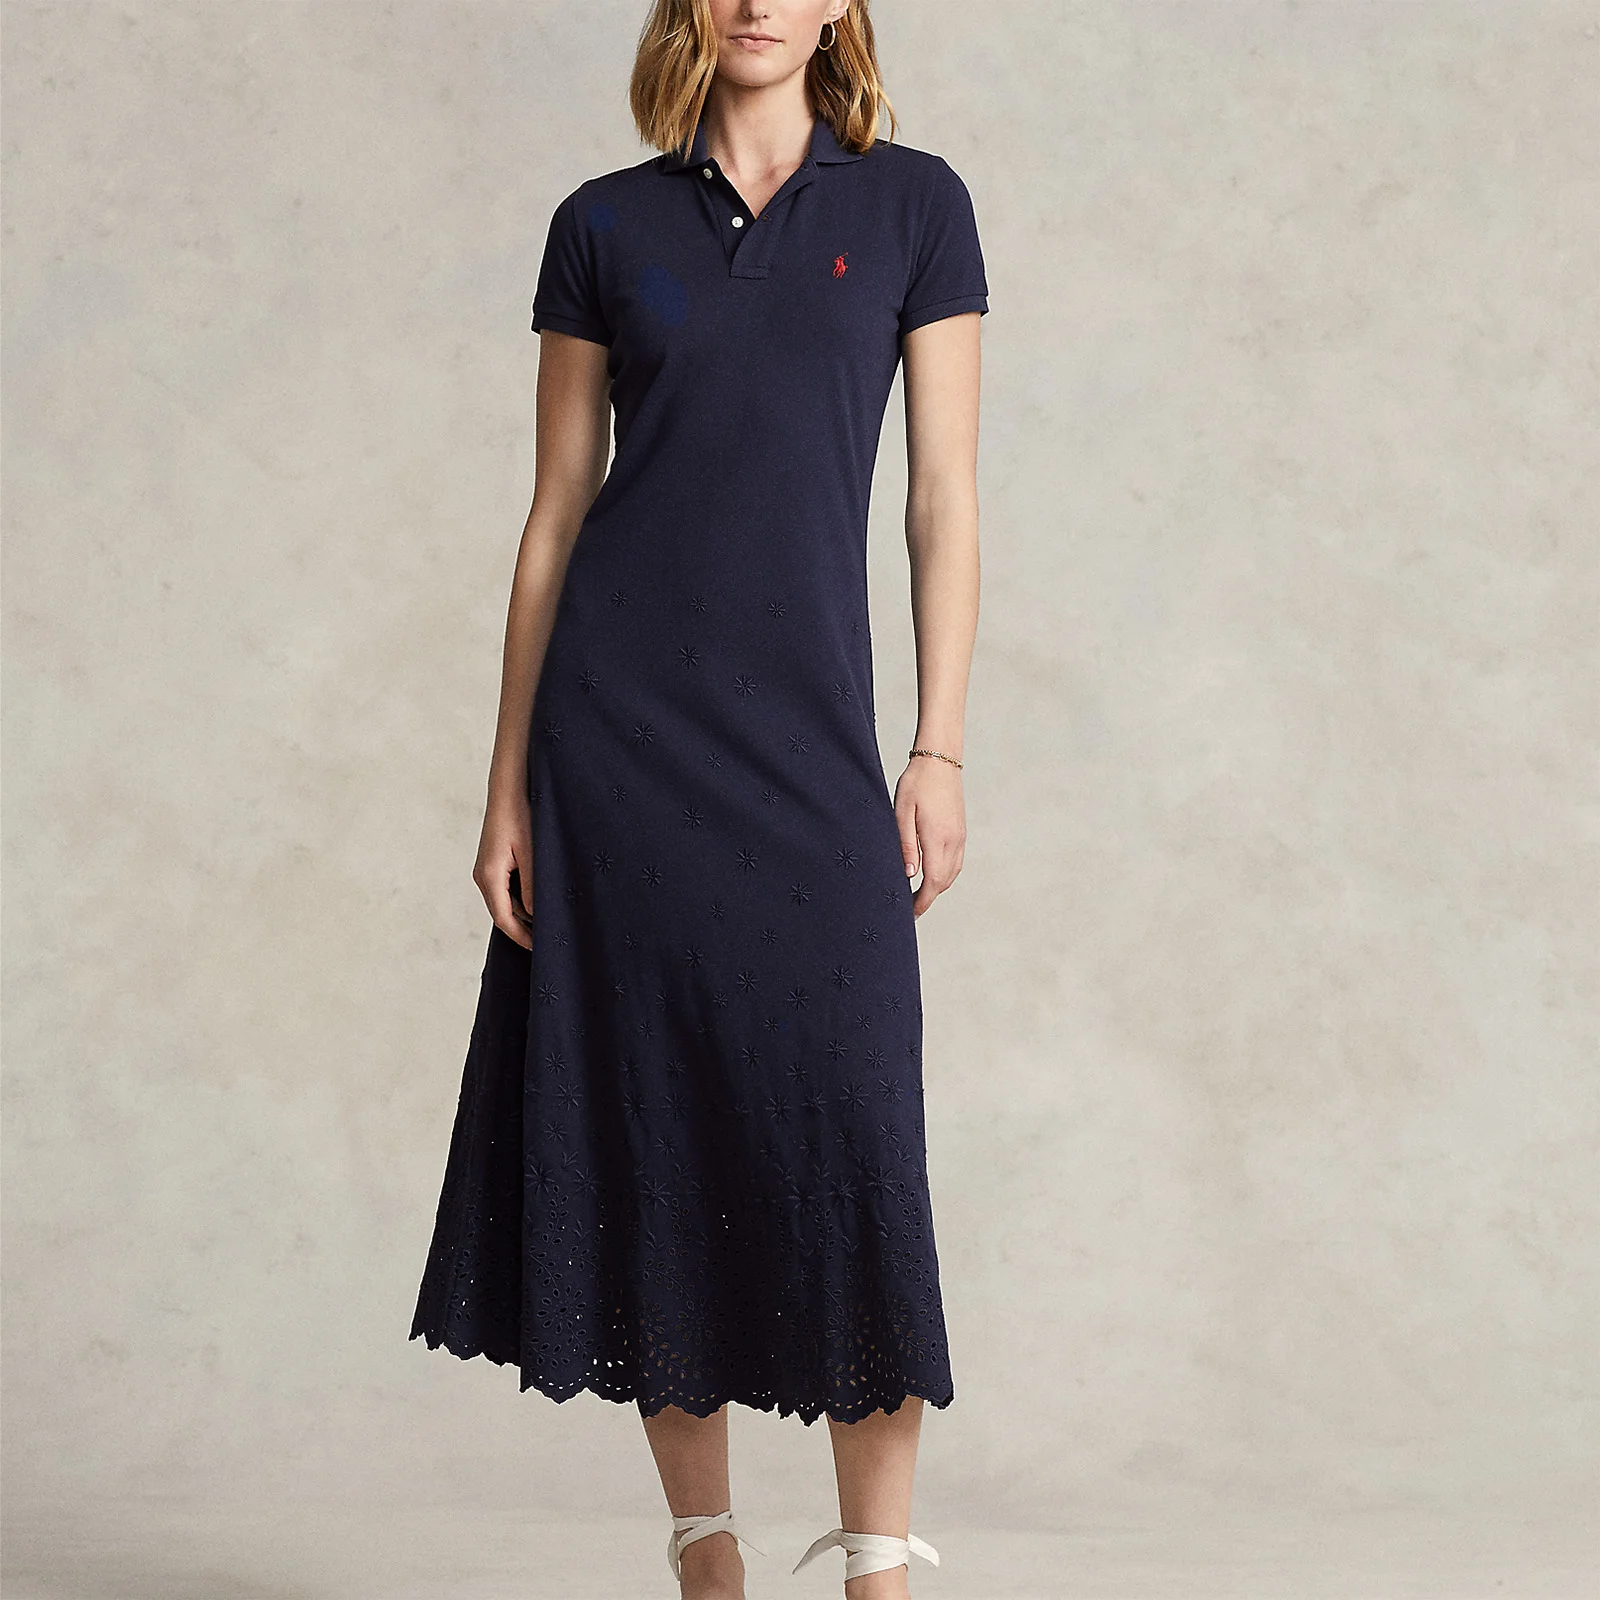 Polo Ralph Lauren Short Sleeve Day Dress Image 1